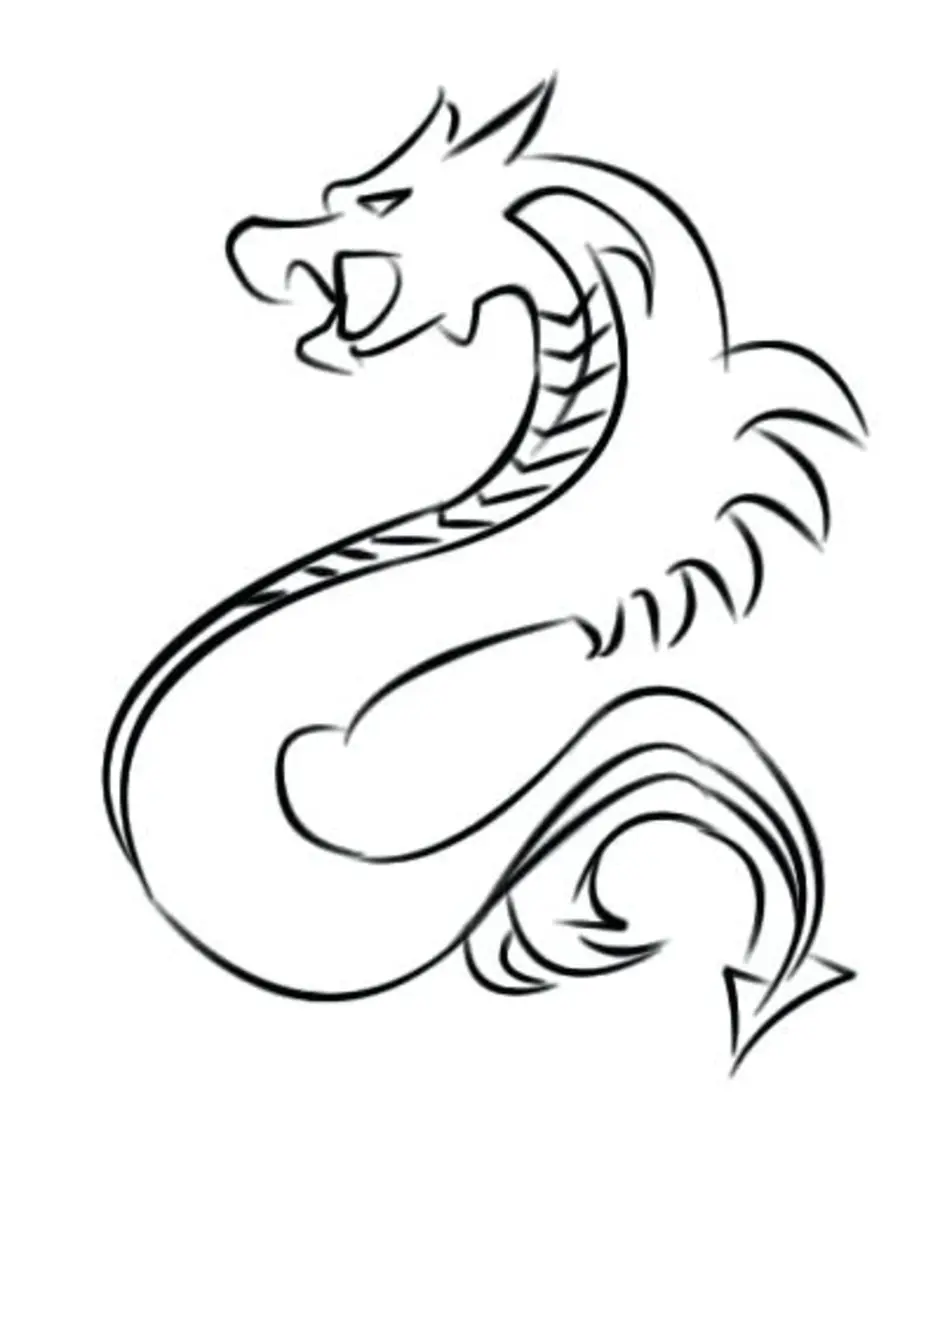 Китайский дракон легко